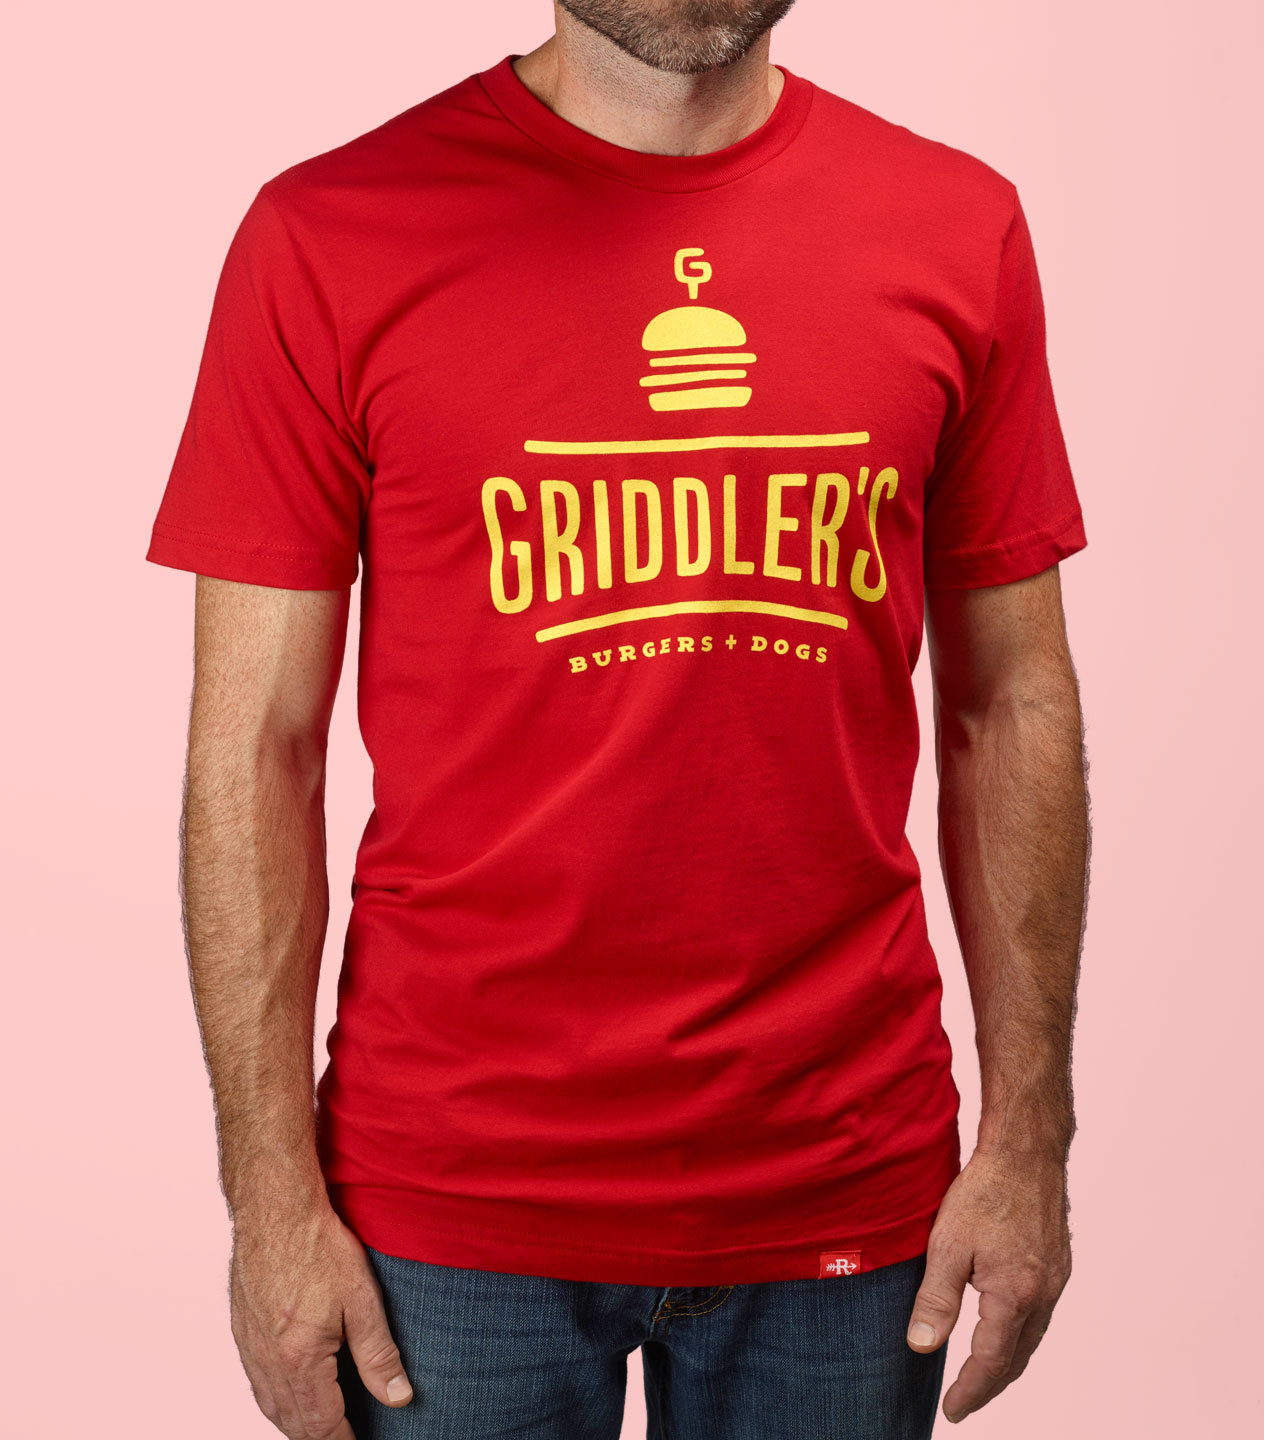 Griddler's employee uniform